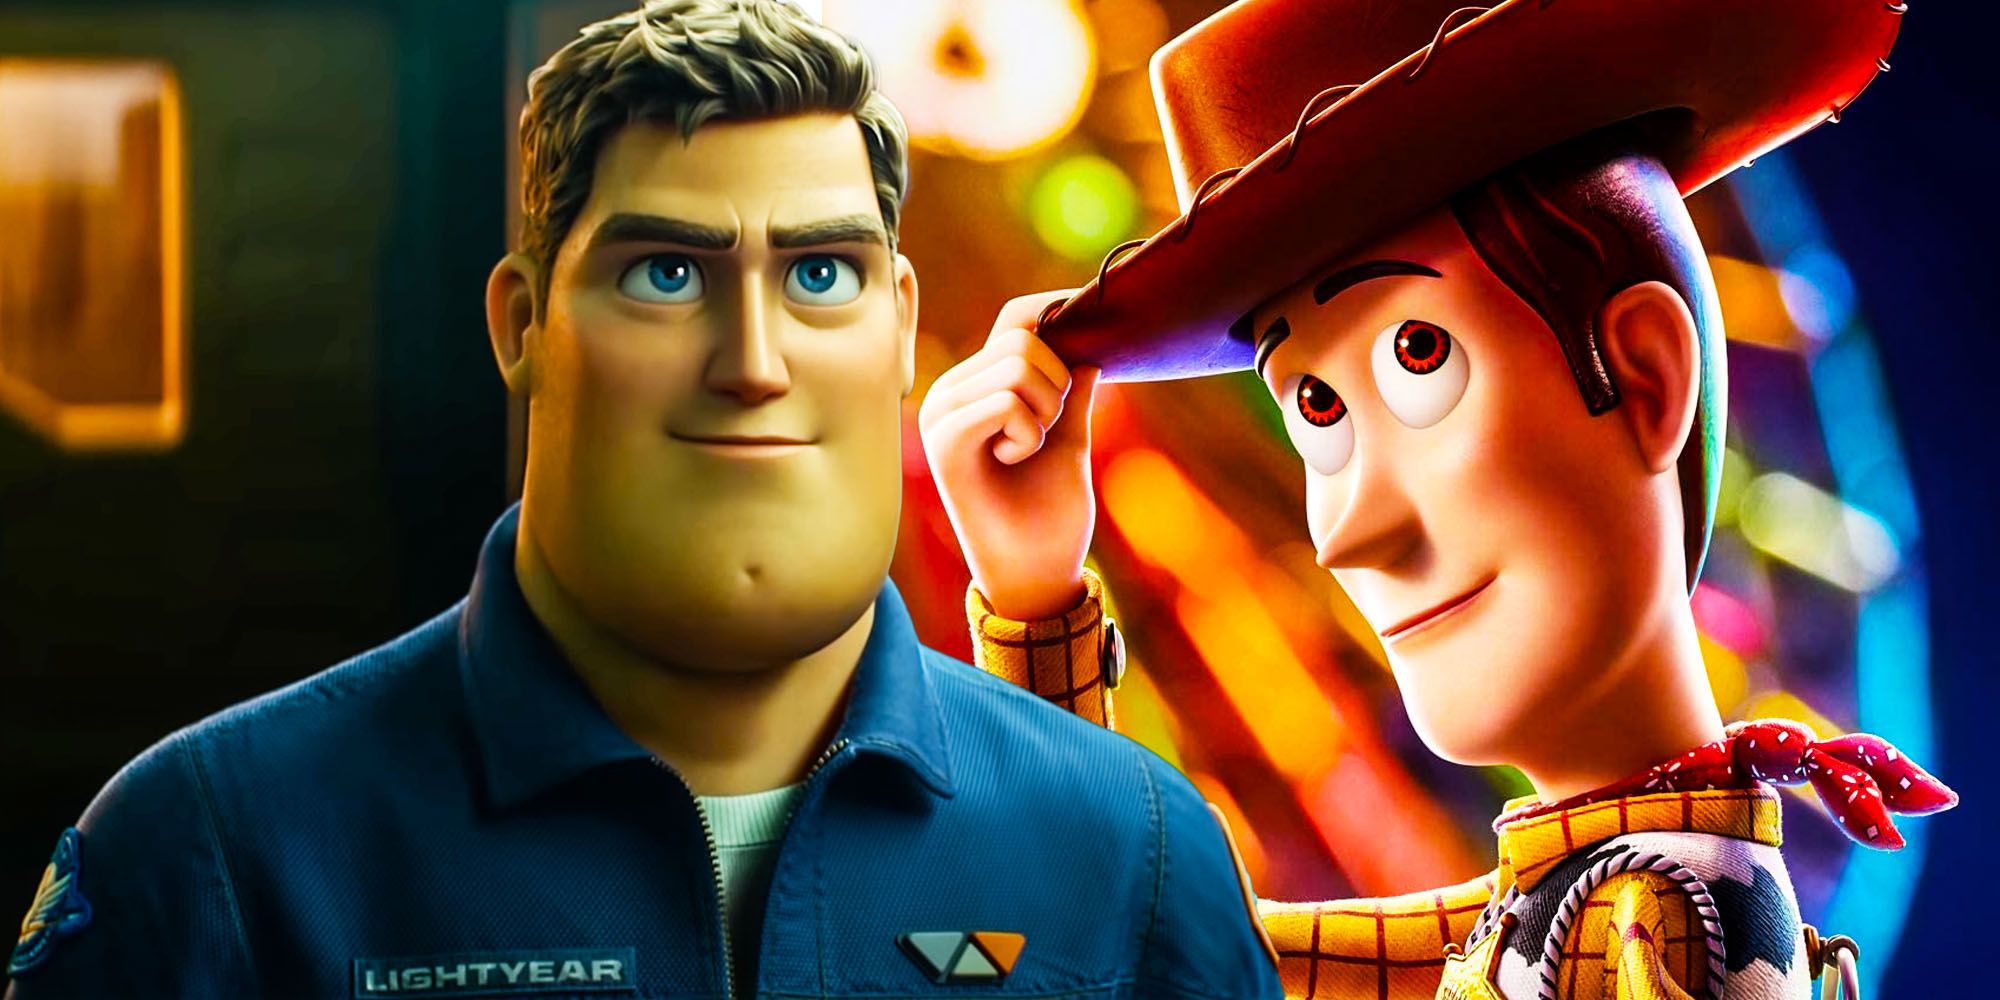 Recasting Woody For A Toy Story lightyear Origin Movie